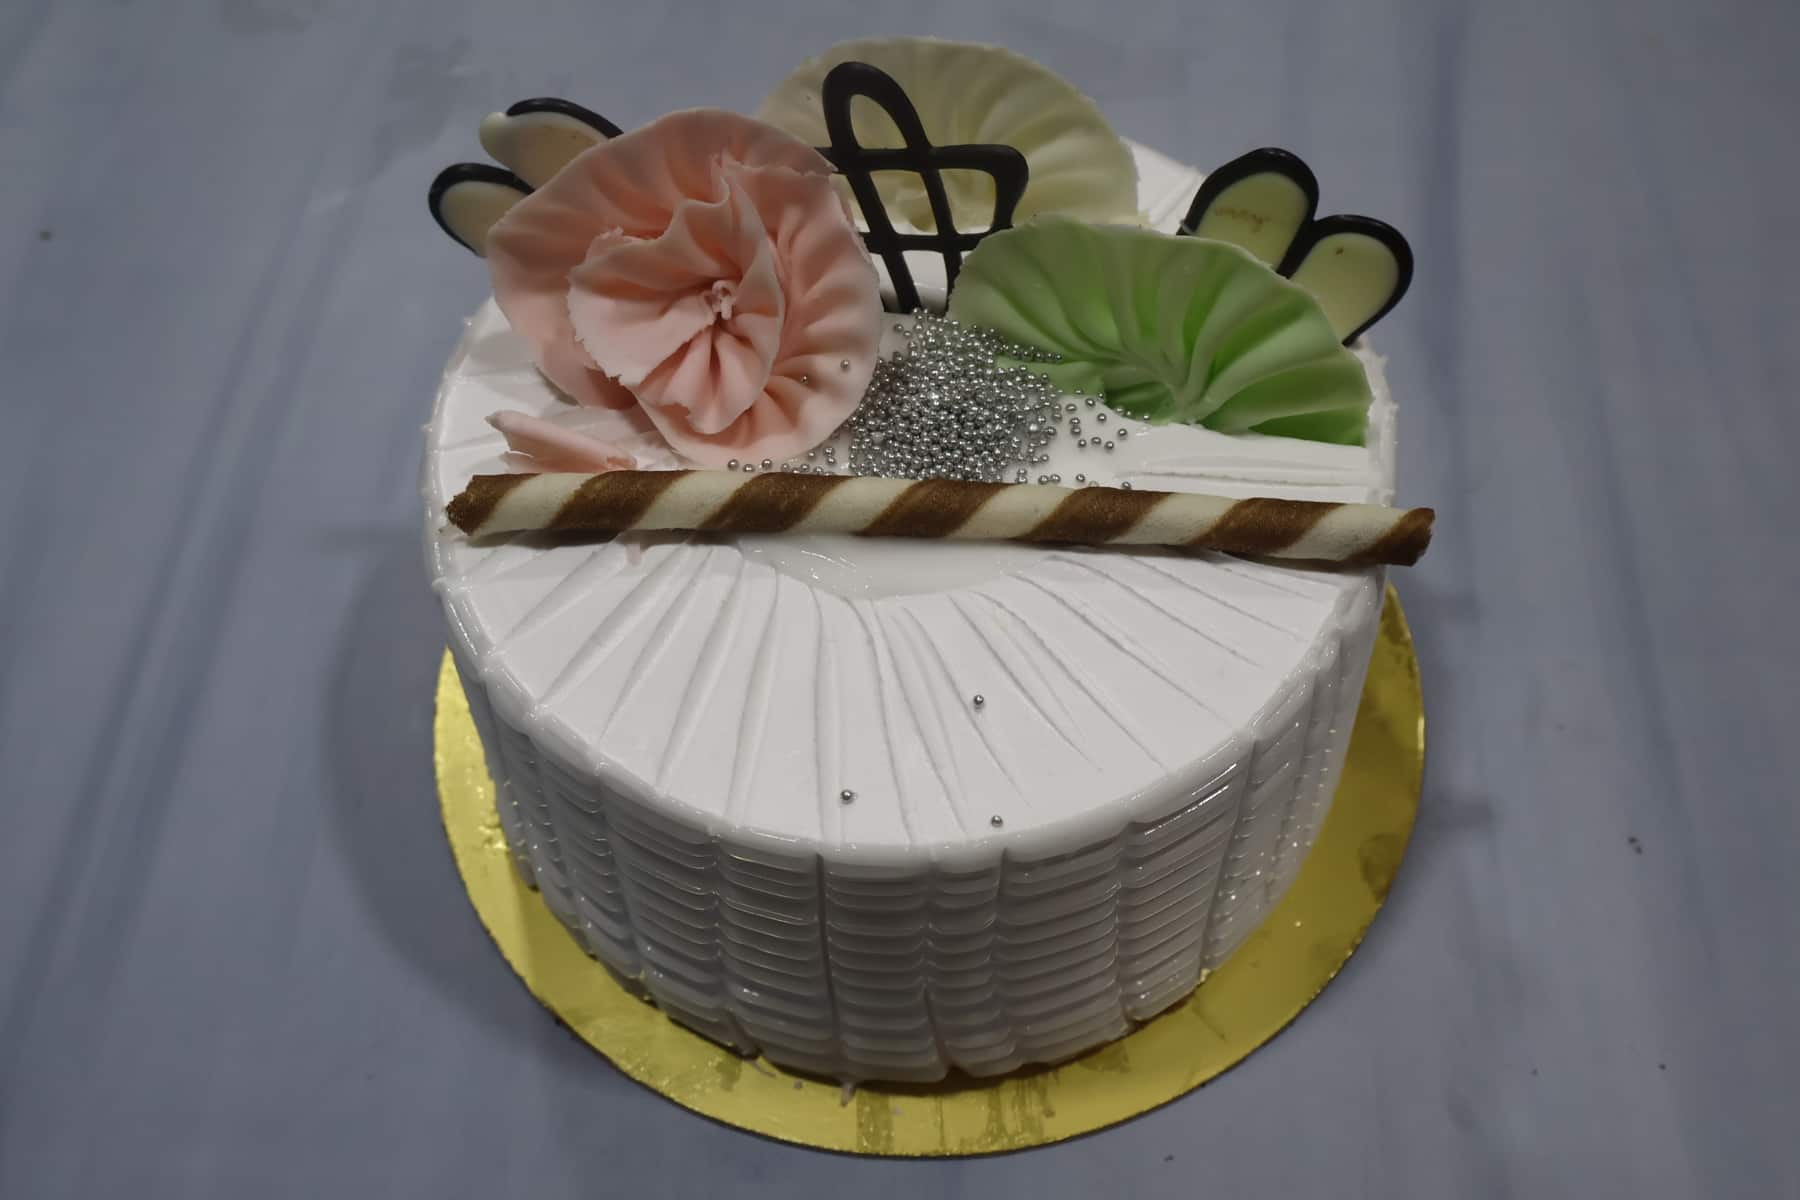 cake Wala bakery in warangal fancy cake and food court bakery 🧁🥯 - YouTube